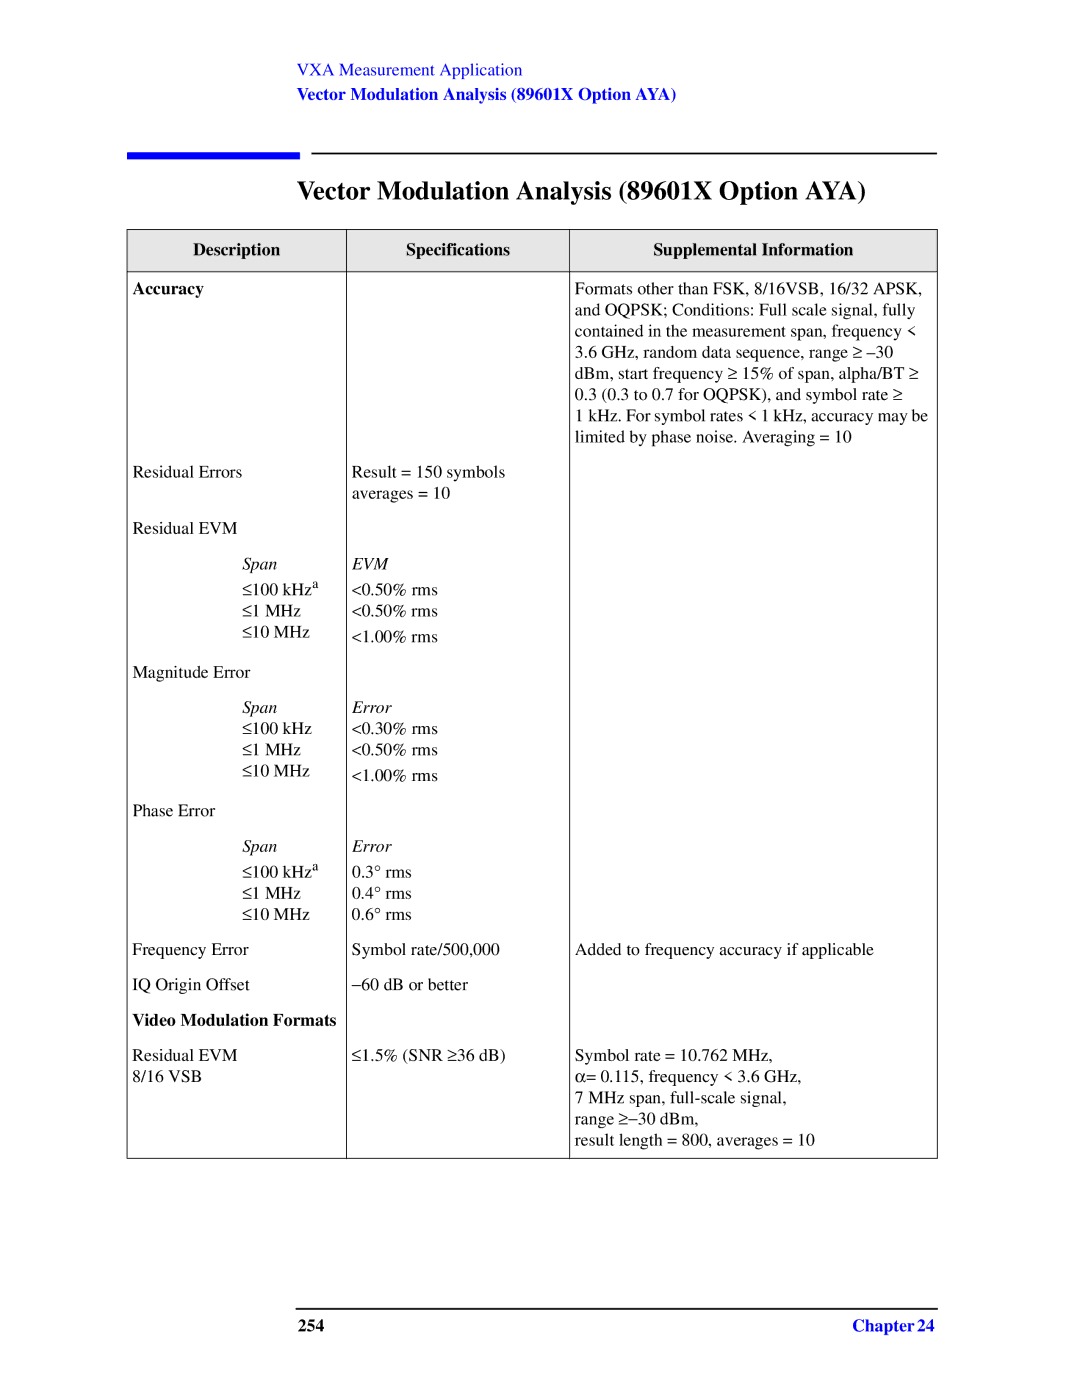 Agilent Technologies N9010A specifications Vector Modulation Analysis 89601X Option AYA, Video Modulation Formats, 254 